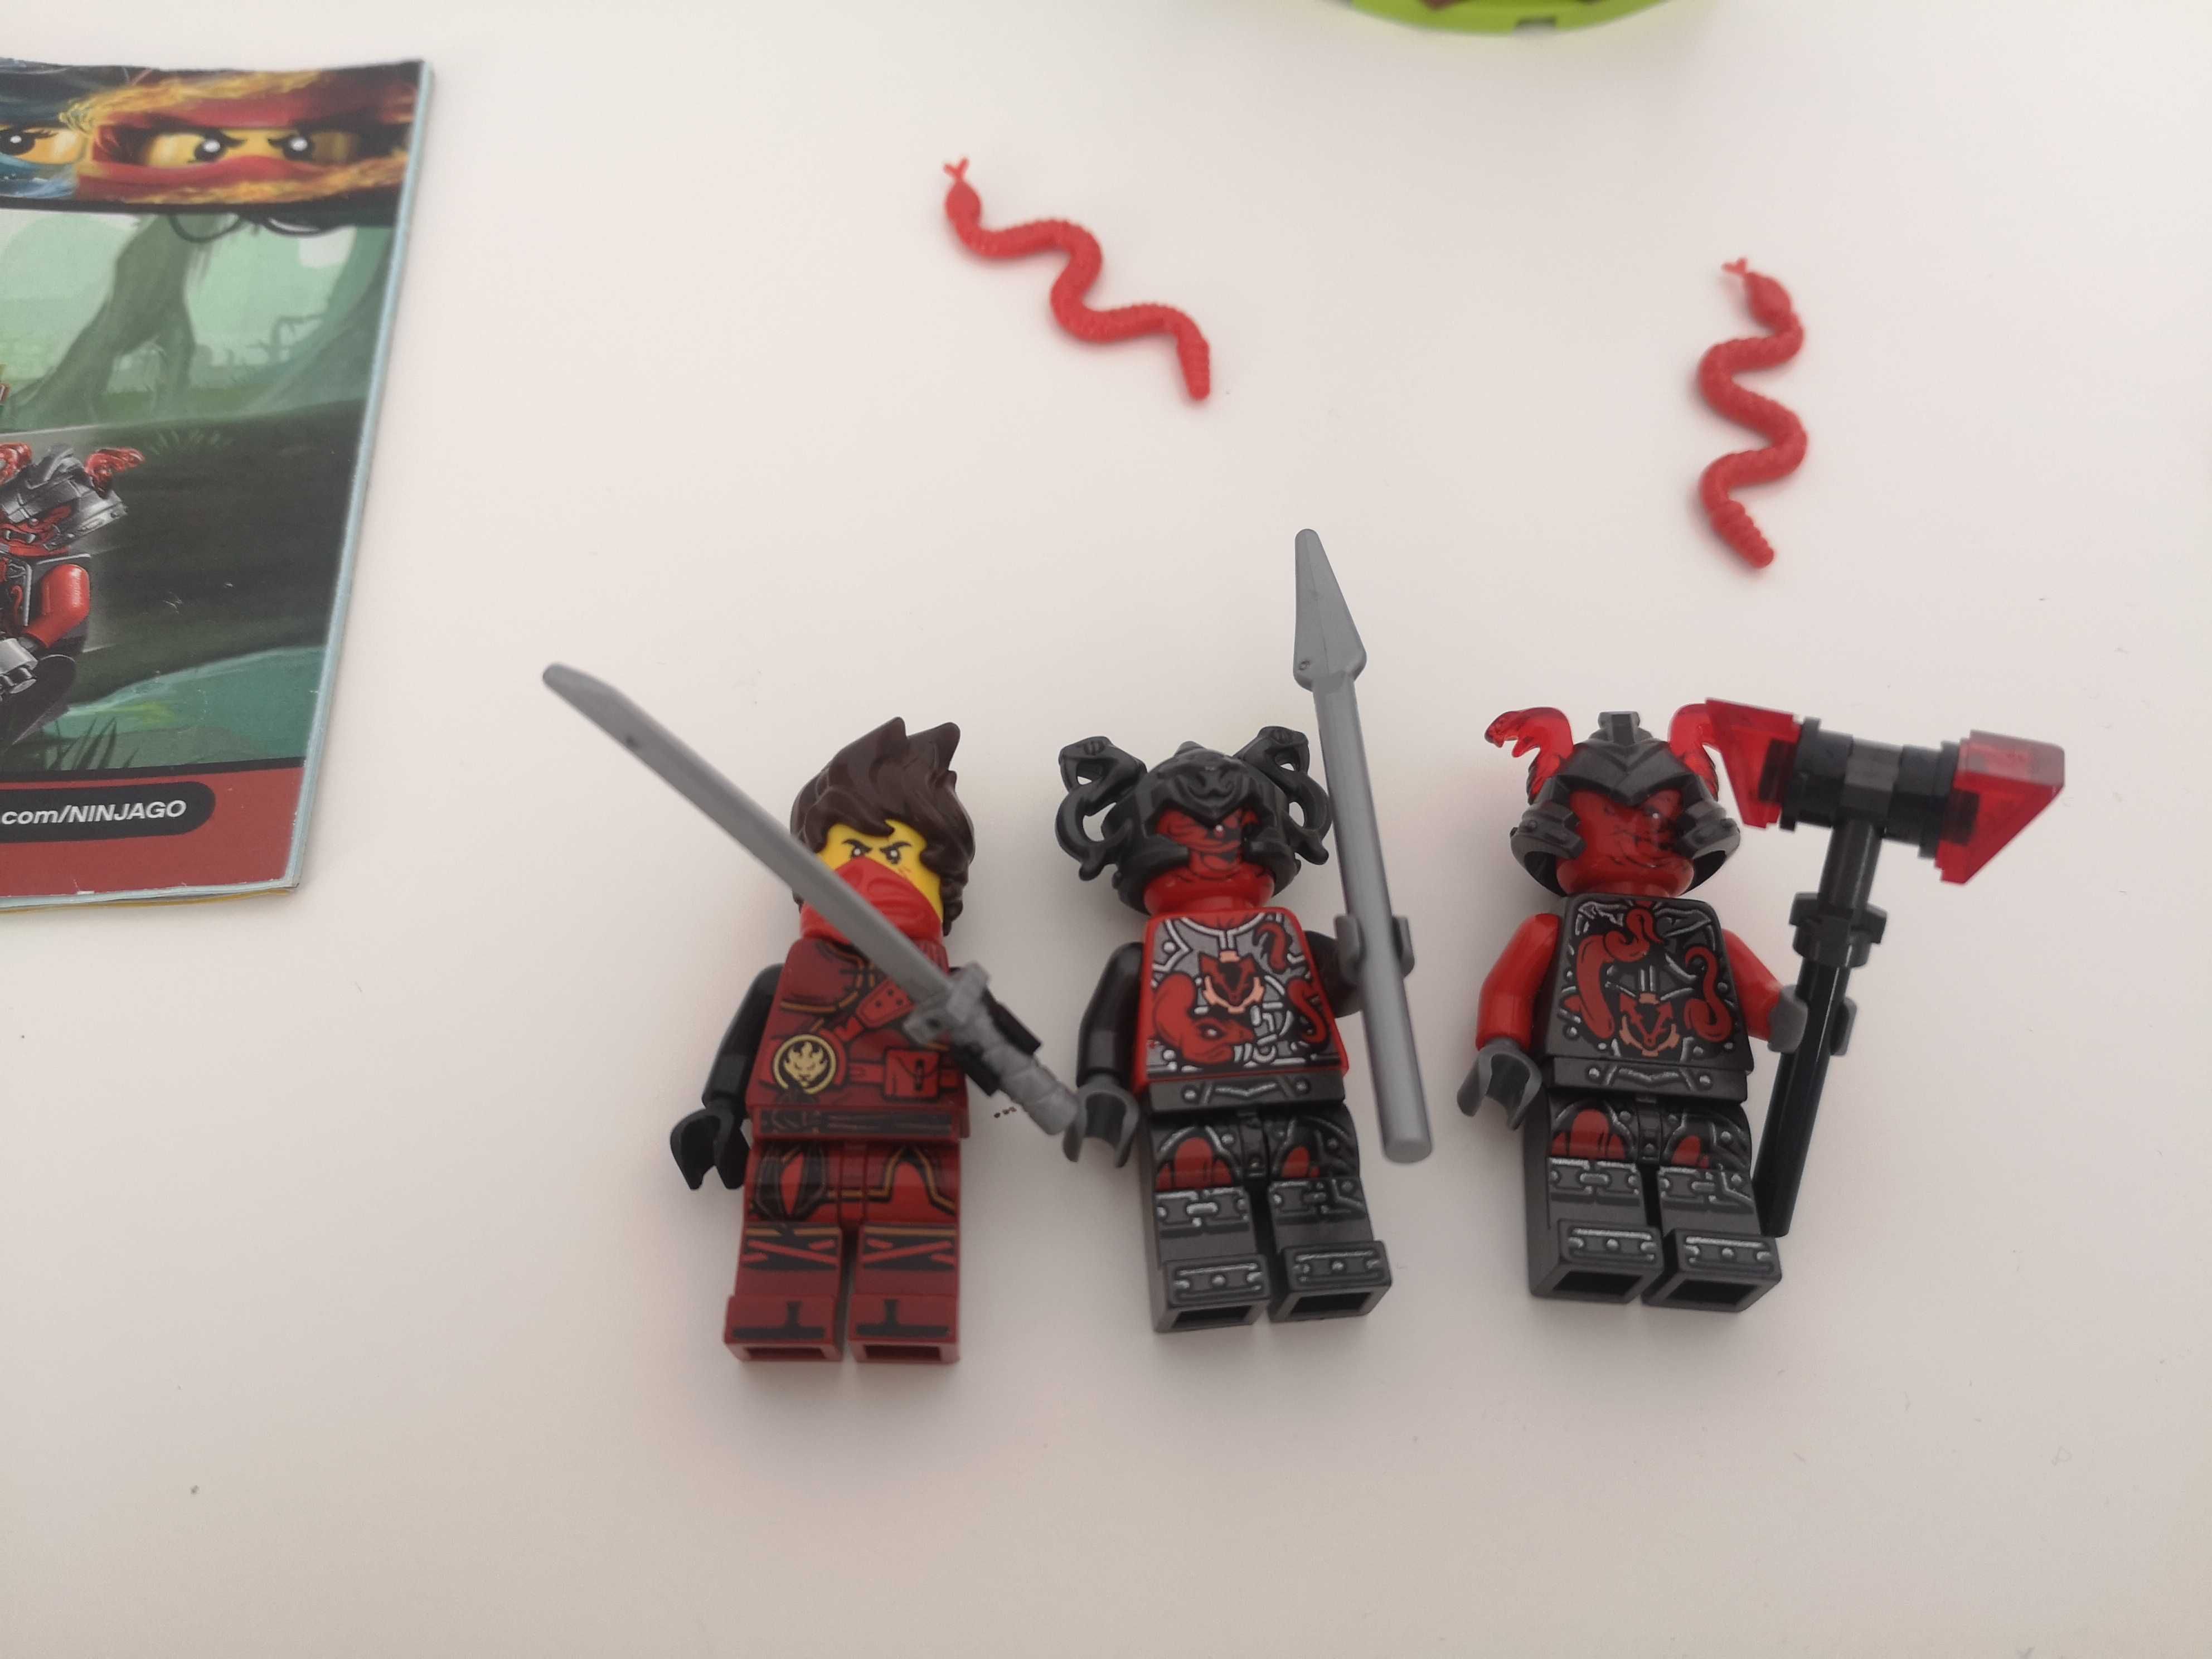 LEGO Ninjago 70621 Atak Cynobru